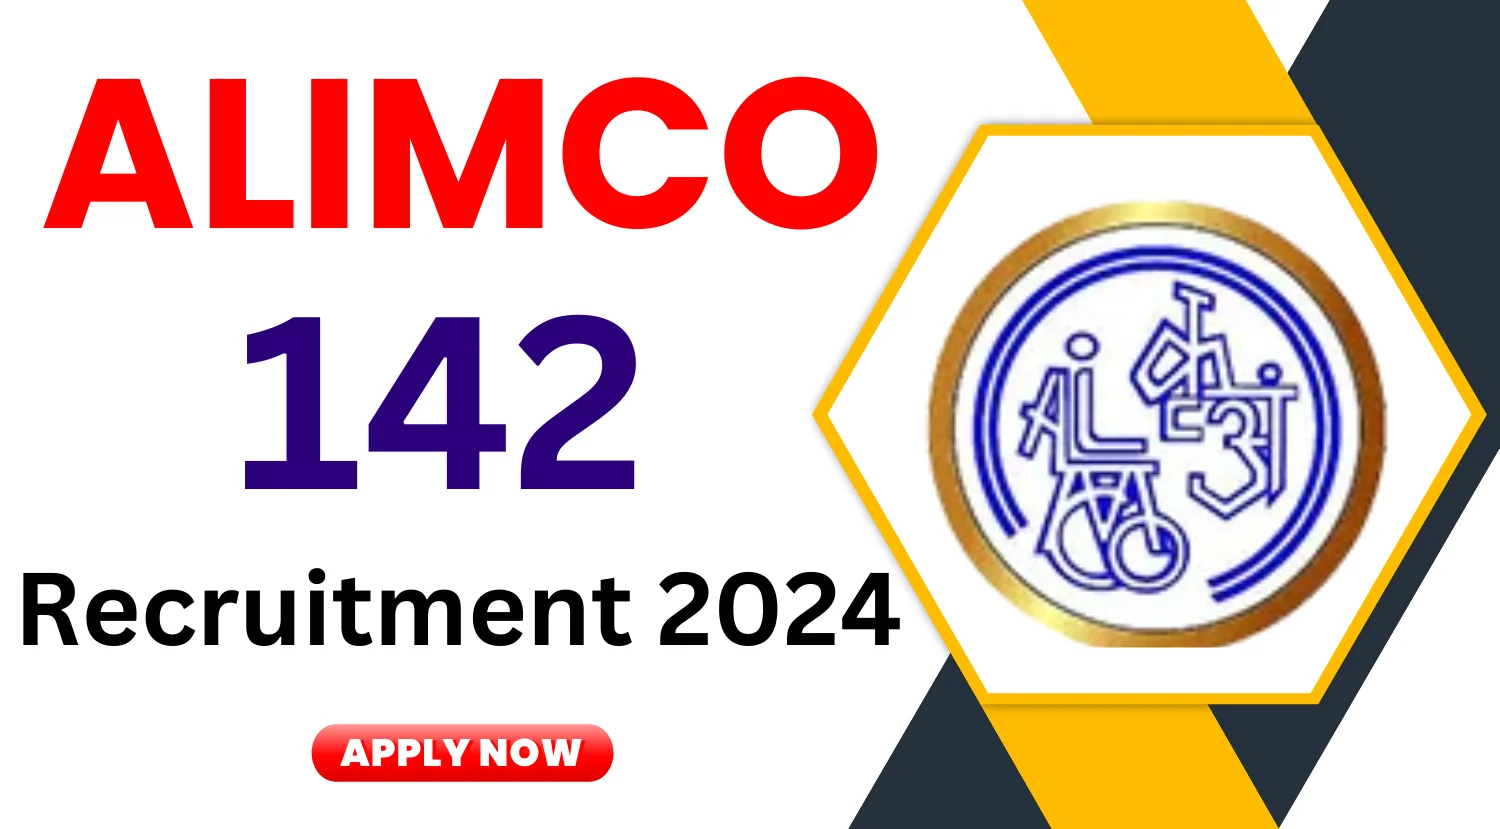 ALIMCO Recruitment 2024 for 142 Vacancies